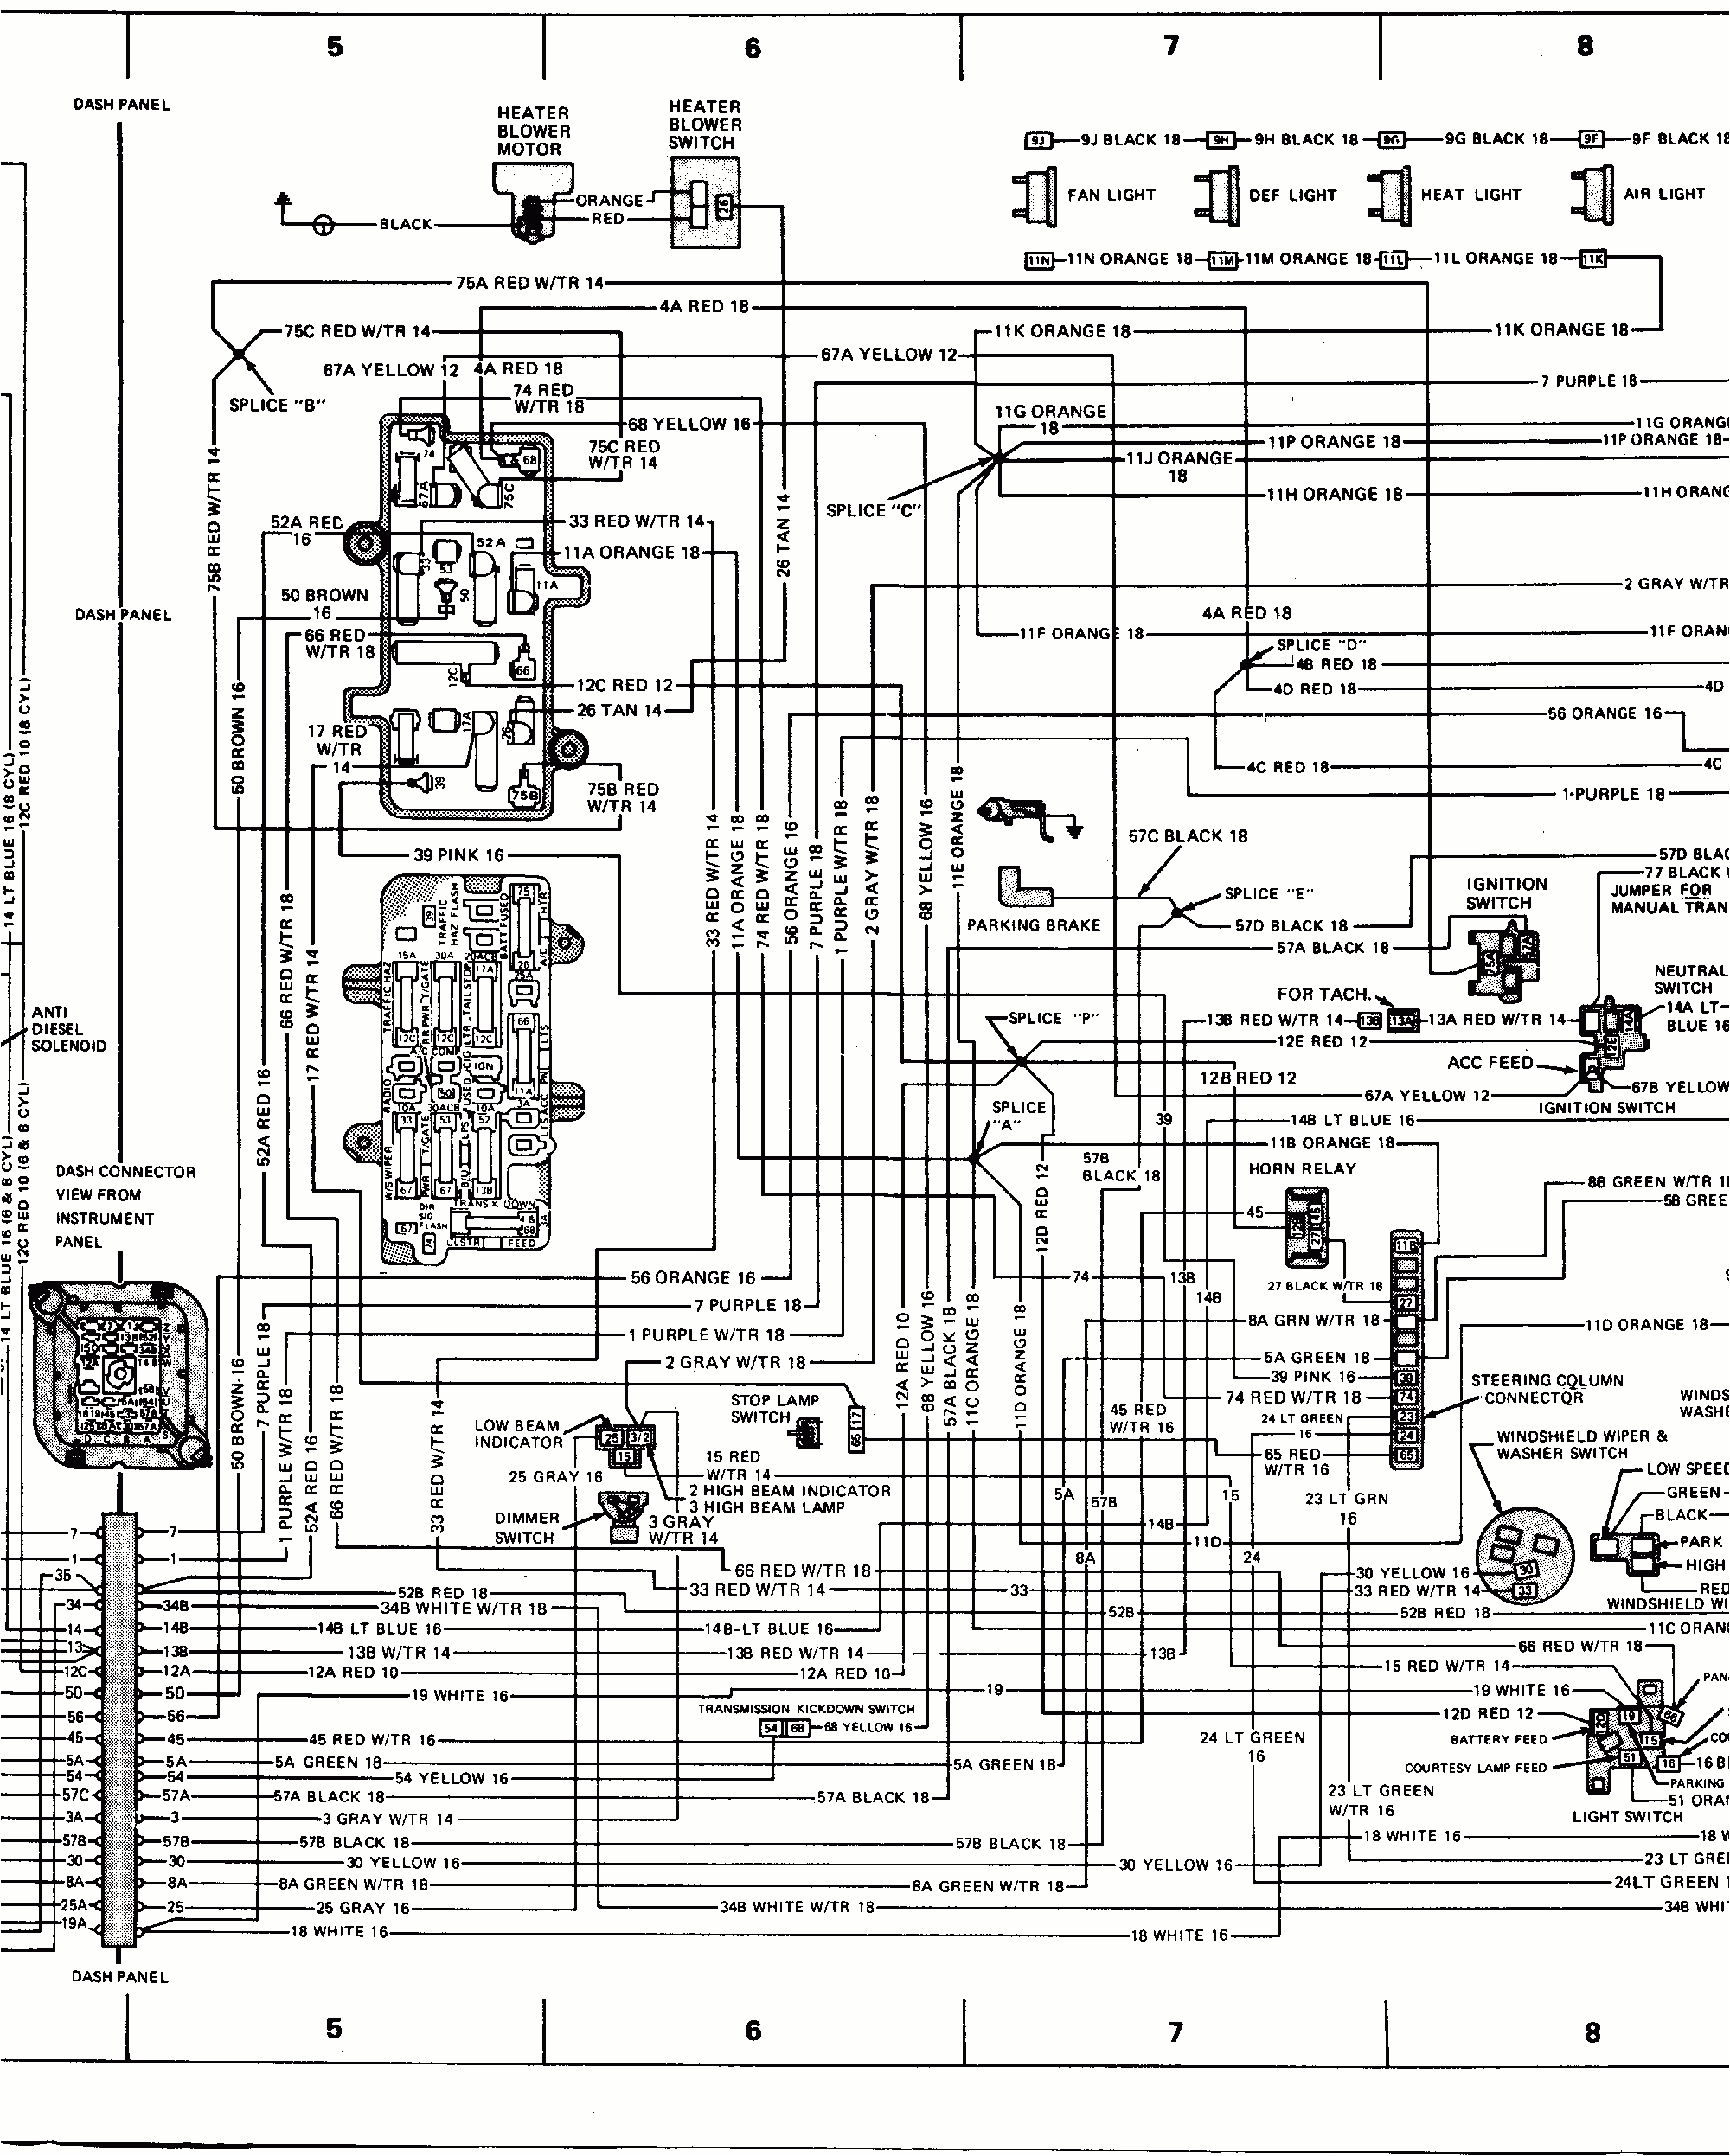 wiring jeep diagram cj7 harness 1982 color schematic diagram database1982 jeep cj7 wiring harness color diagram